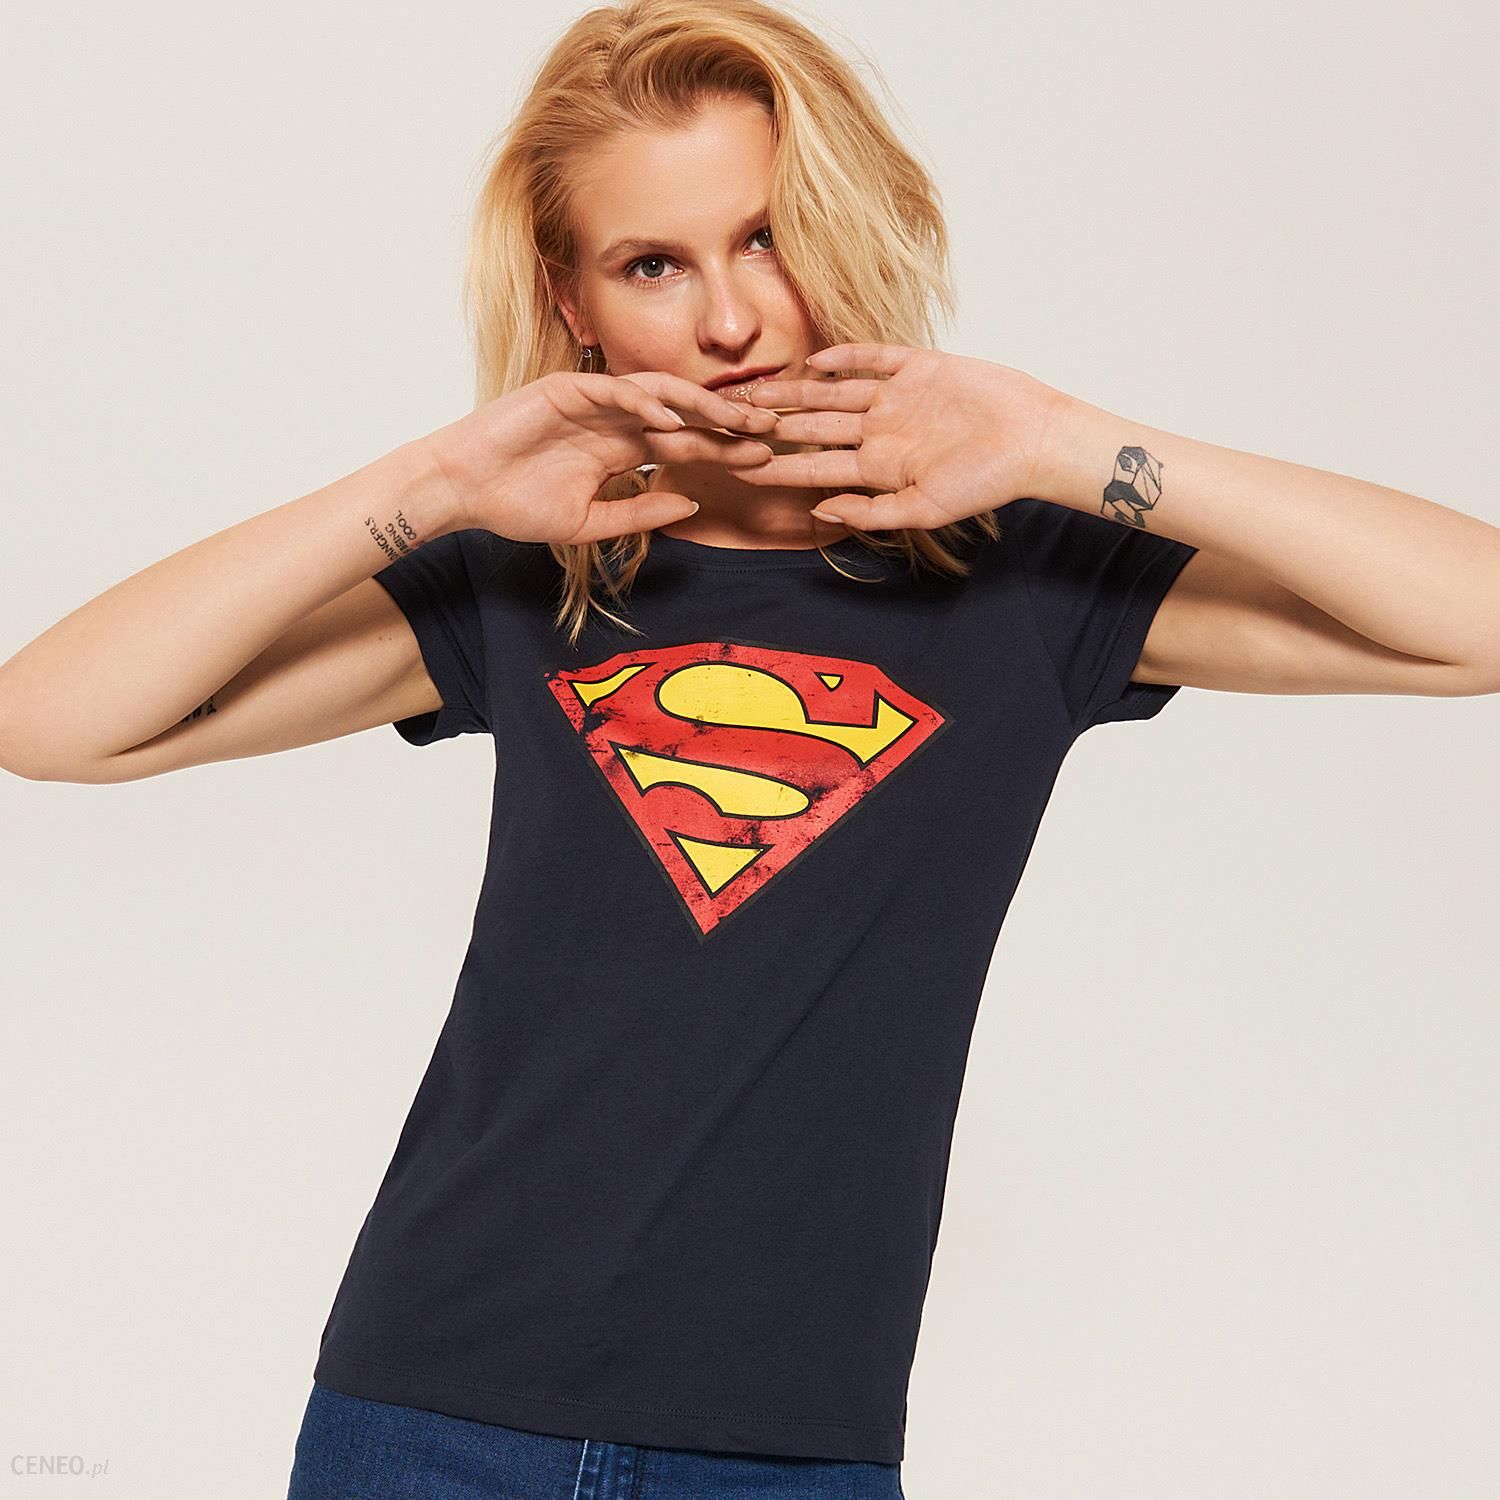 With, Superman 60% OFF Costume V-Neck Supergirl Logo Women\'s Glitter